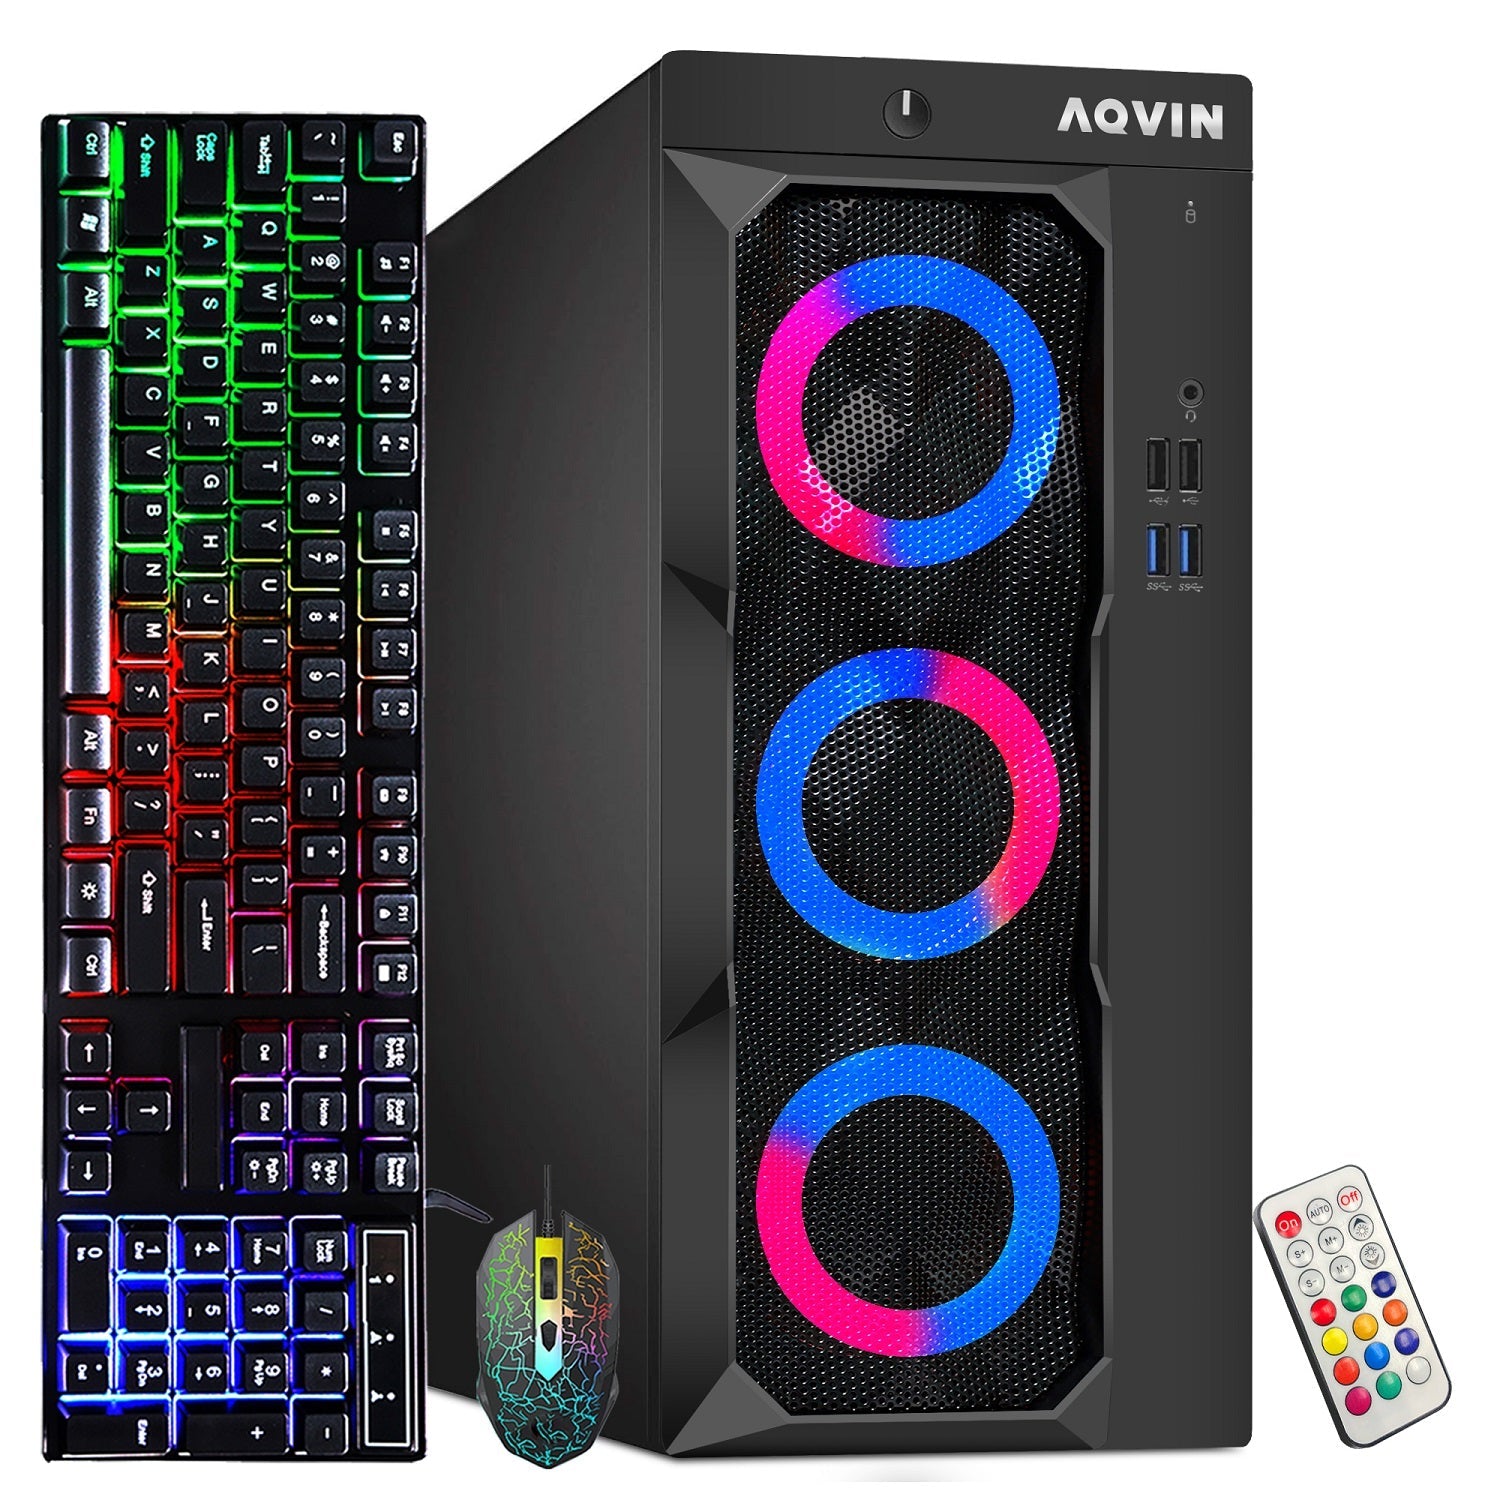 Gaming PC AQVIN Computer Tower PC, 27-inch Curved Gaming Monitor, Intel Core i7 - 6th/ 7th CPU,  32GB DDR4 RAM, 1TB SSD, RX 550/GTX1630/1050Ti/1650 HDMI, Windows 10 Pro, WIFI - Refurbished